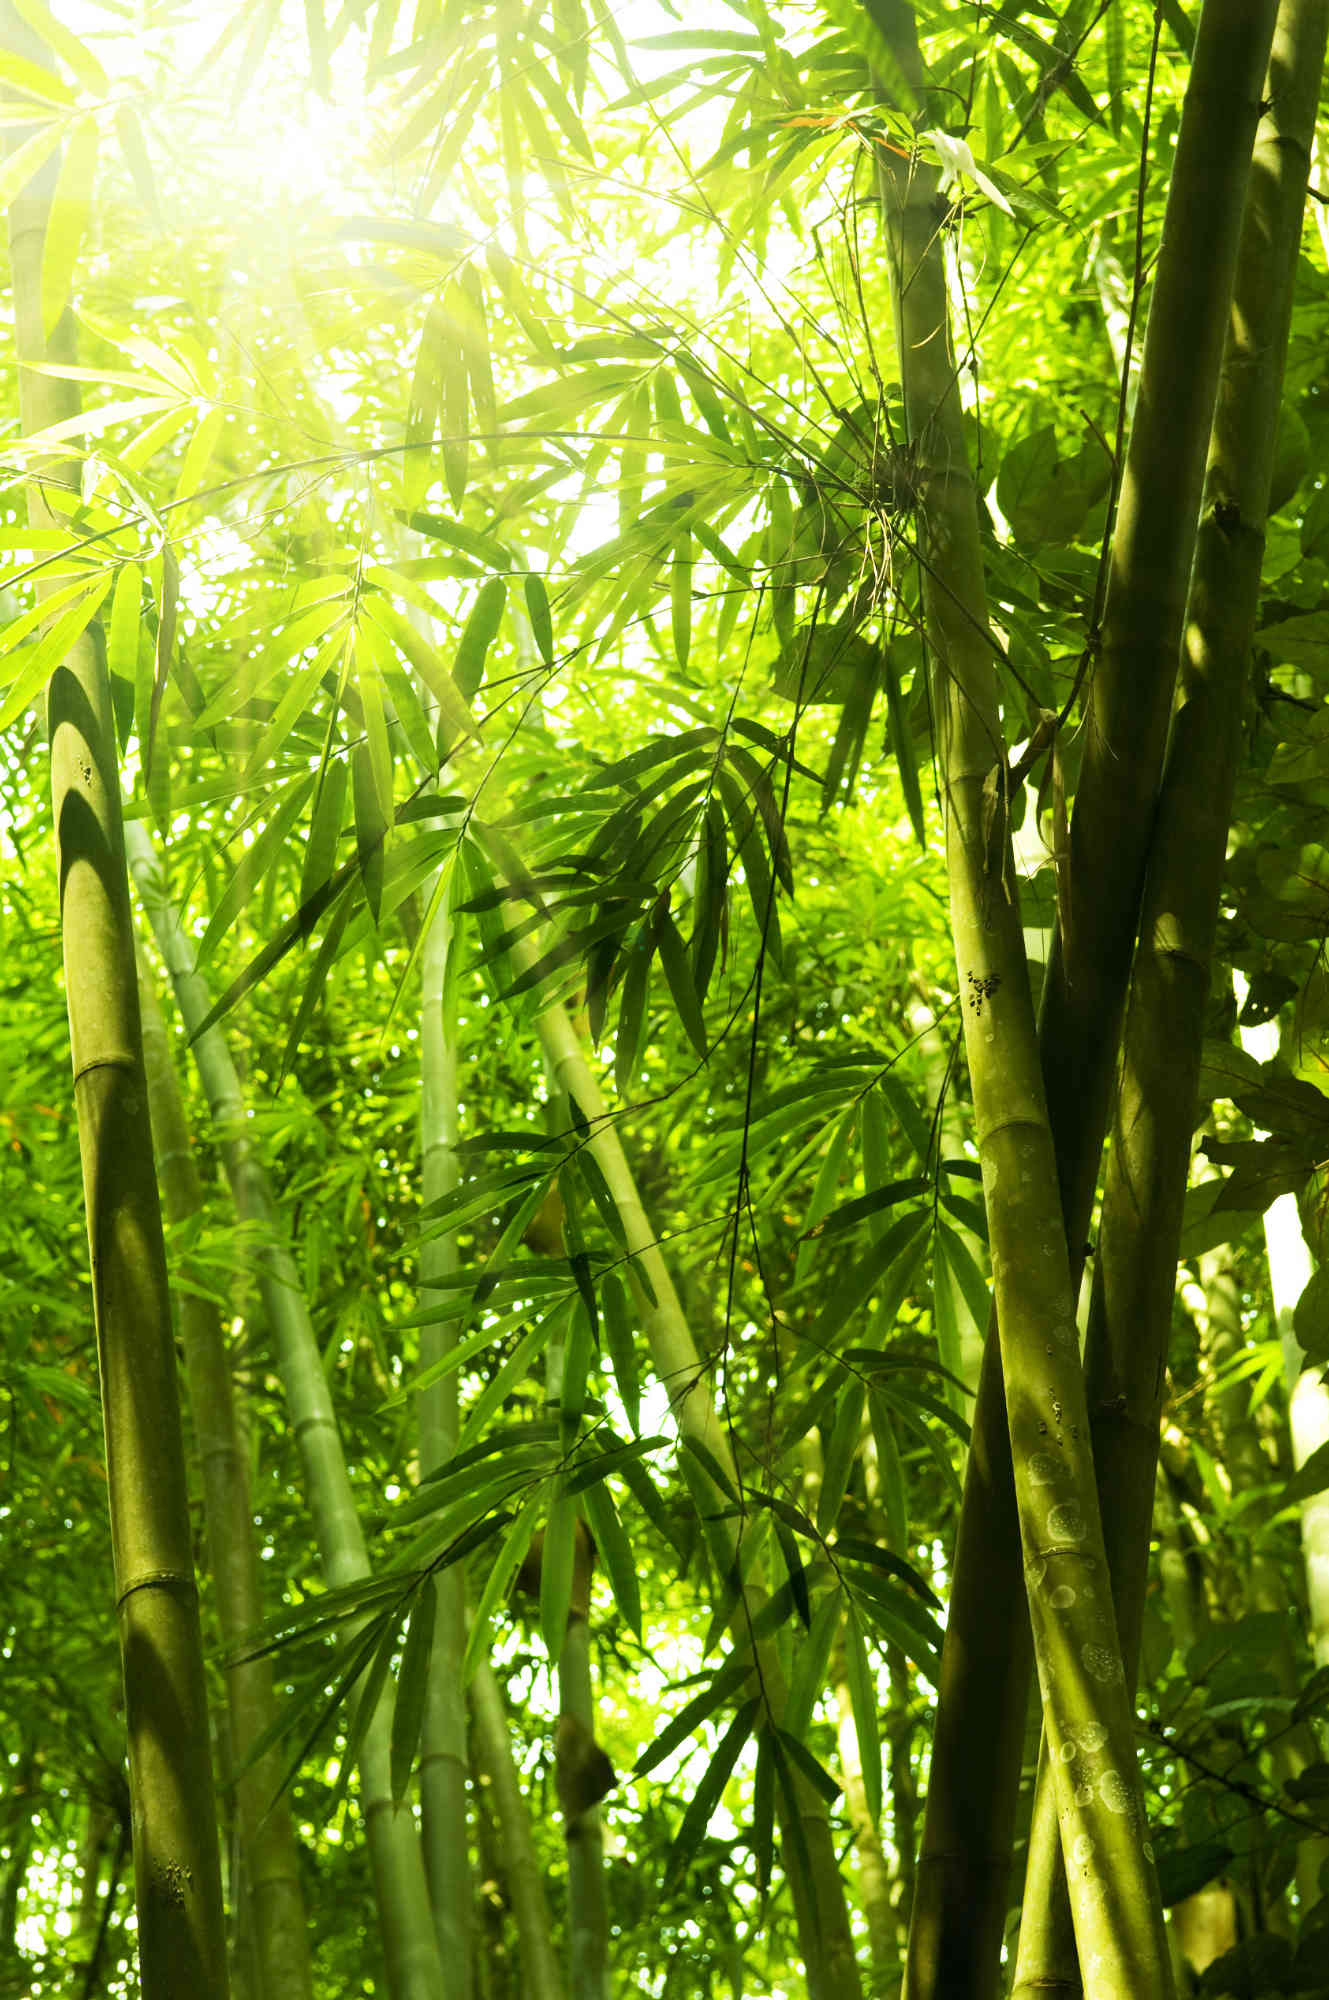 Wallpaper Mural Bamboo Leaves | Muralunique